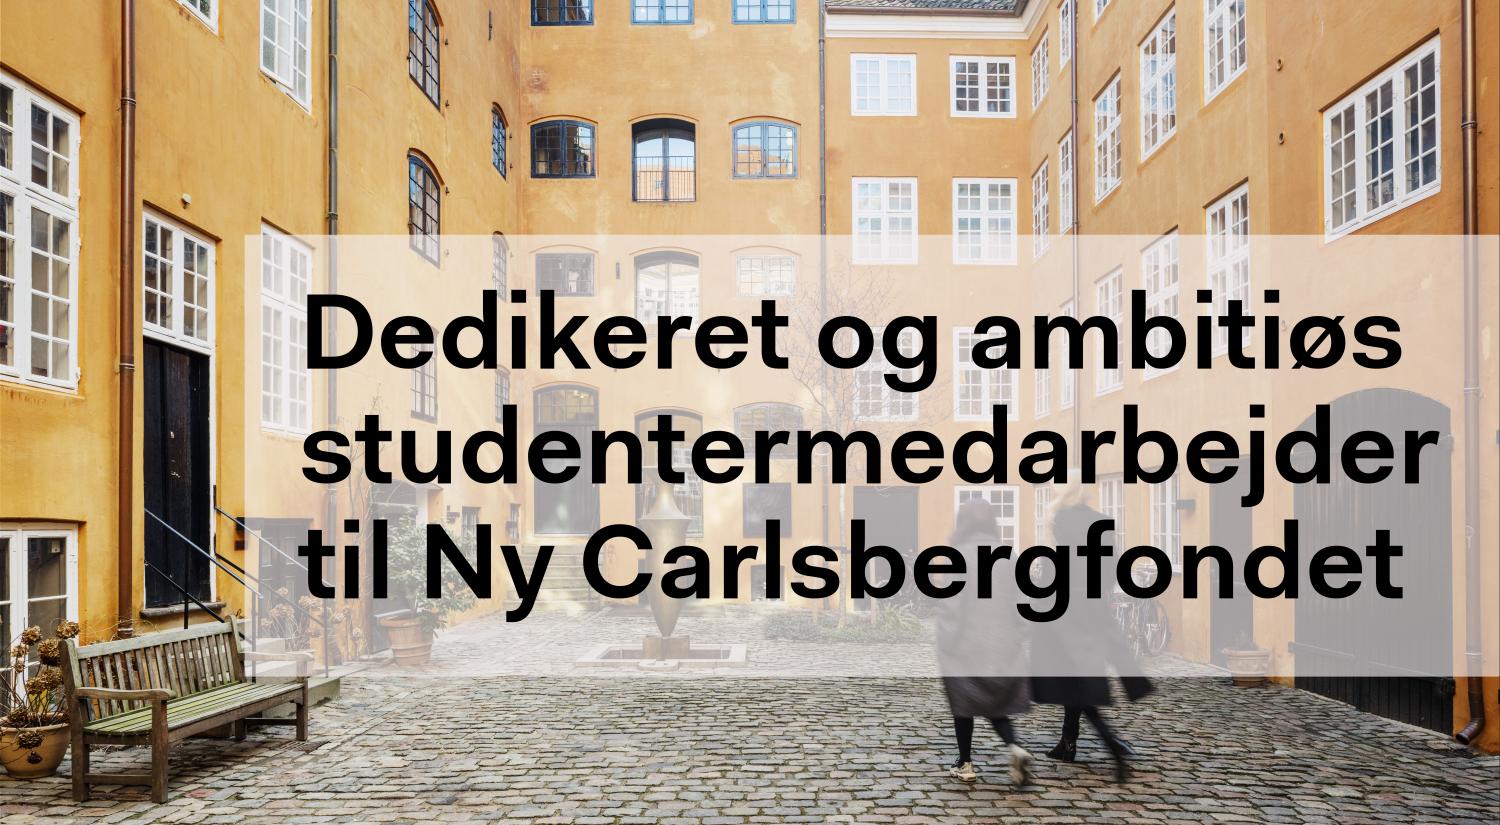 Studentermedarbejder til Ny Carlsbergfondet